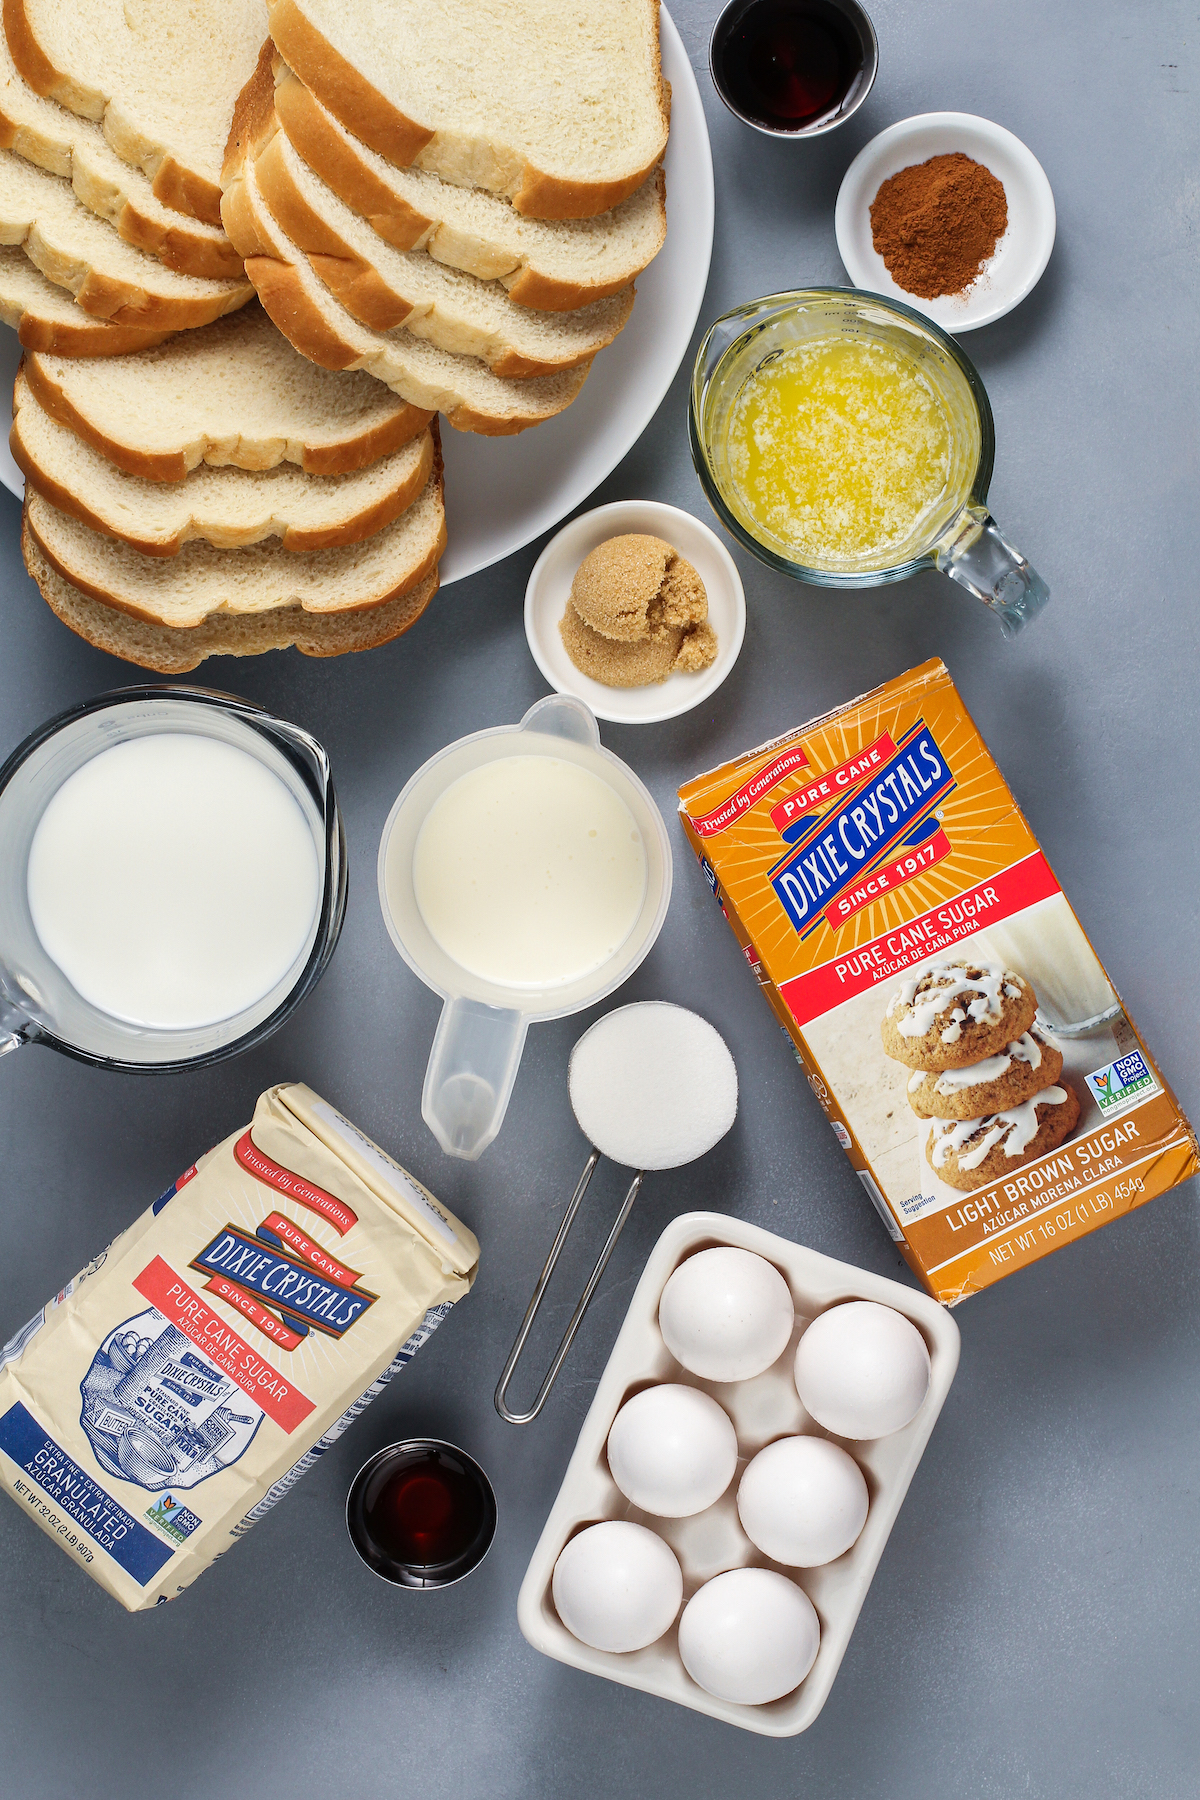 From top left: Sliced bread, vanilla, melted butter, cream, milk, cinnamon, granulated sugar, brown sugar, eggs.